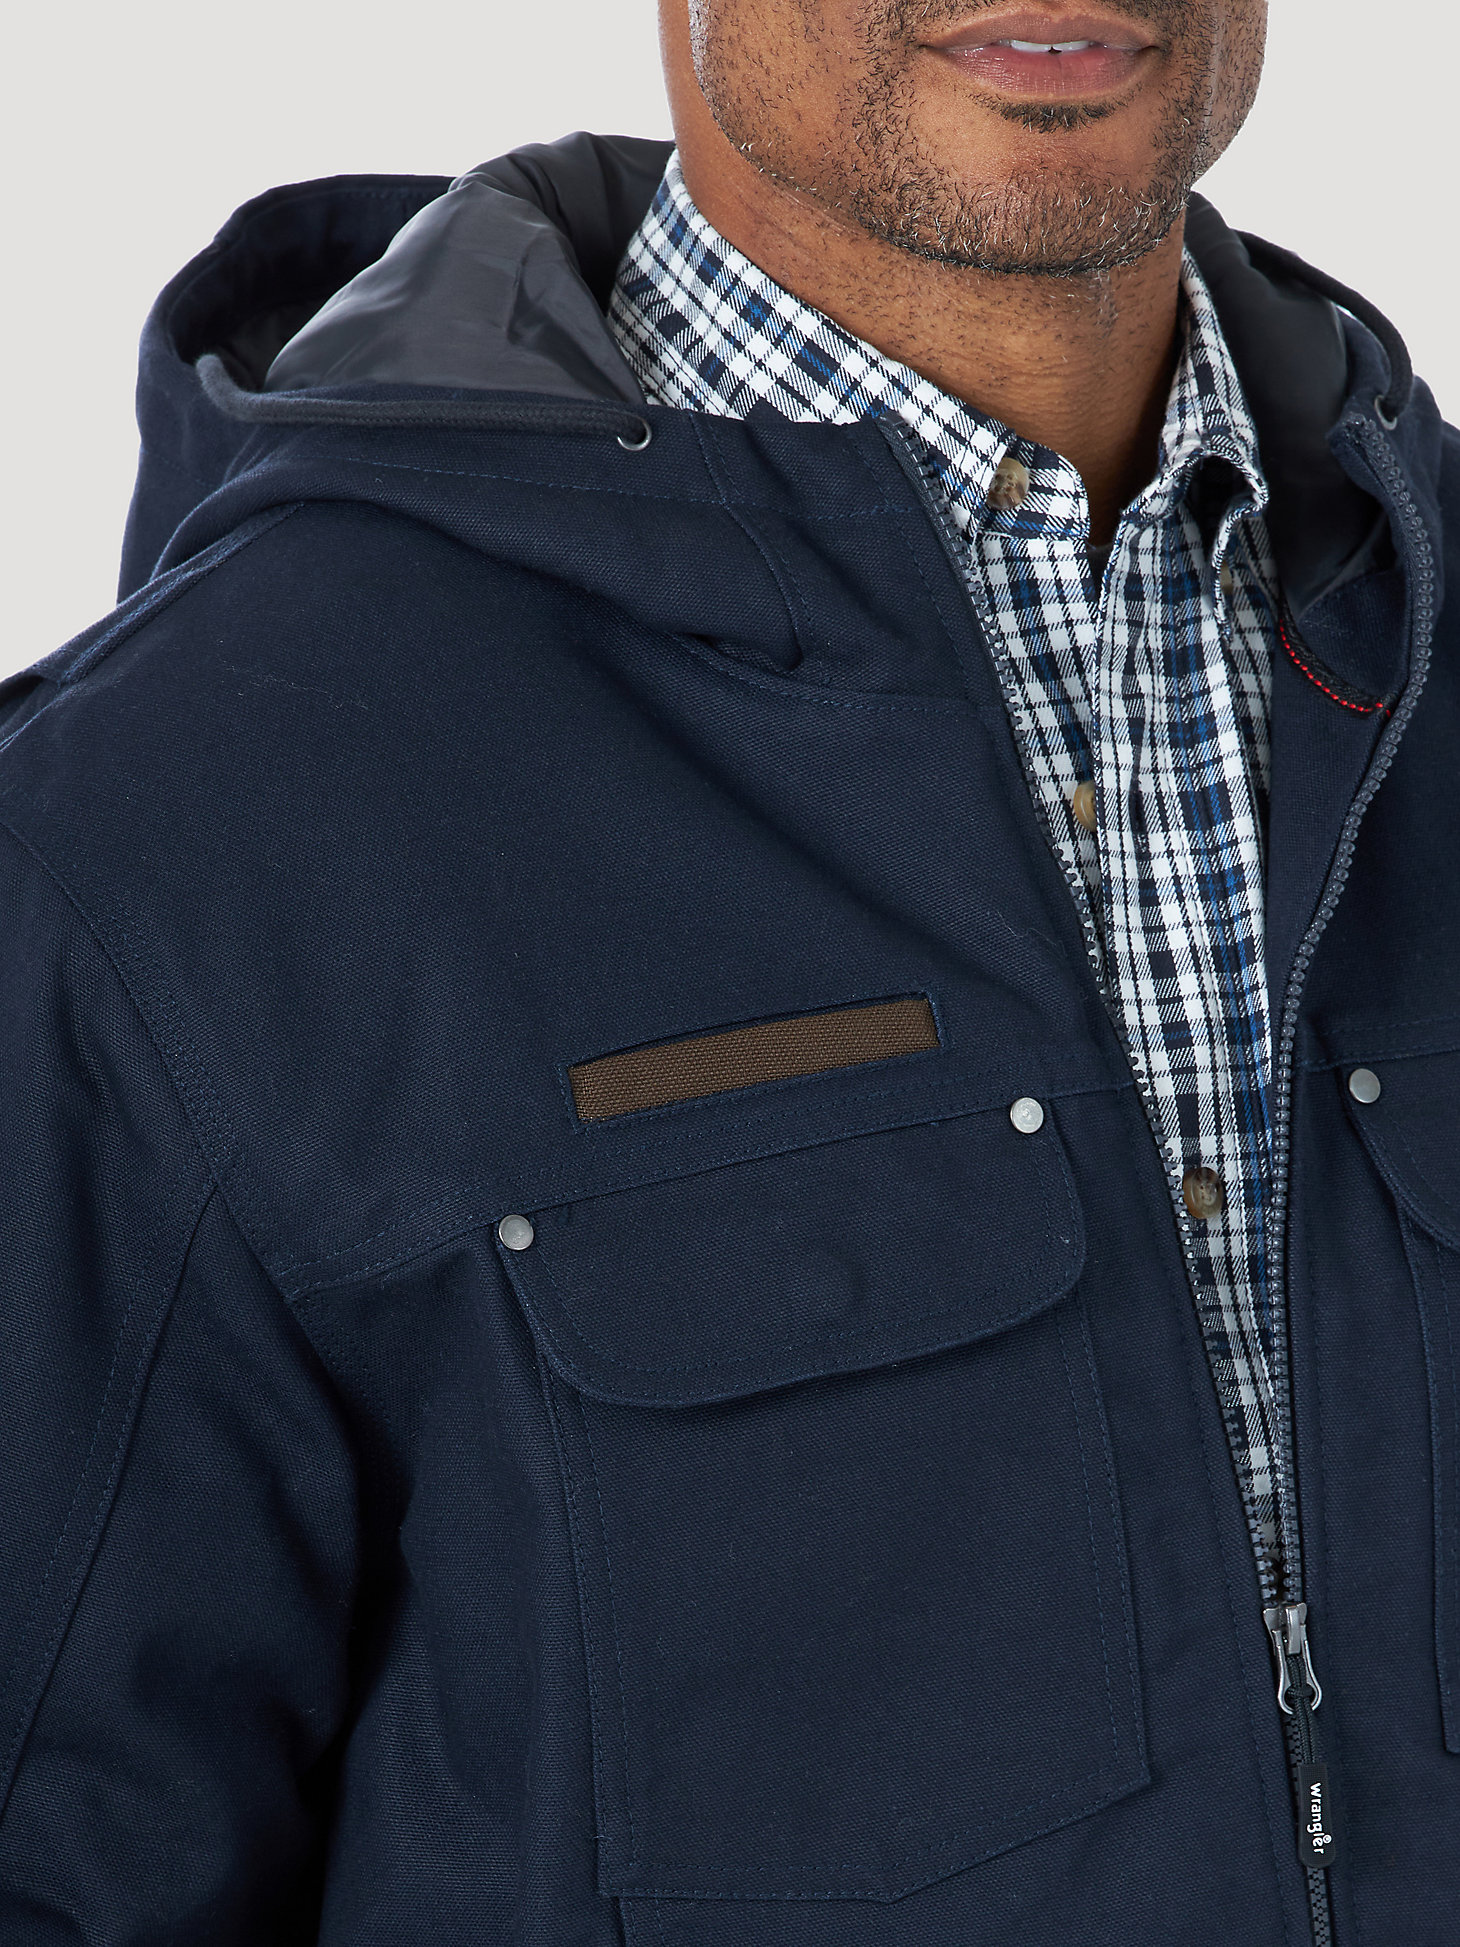 Wrangler® RIGGS Workwear® Tough Layers Insulated Canvas Work Jacket in Dark Navy alternative view 1